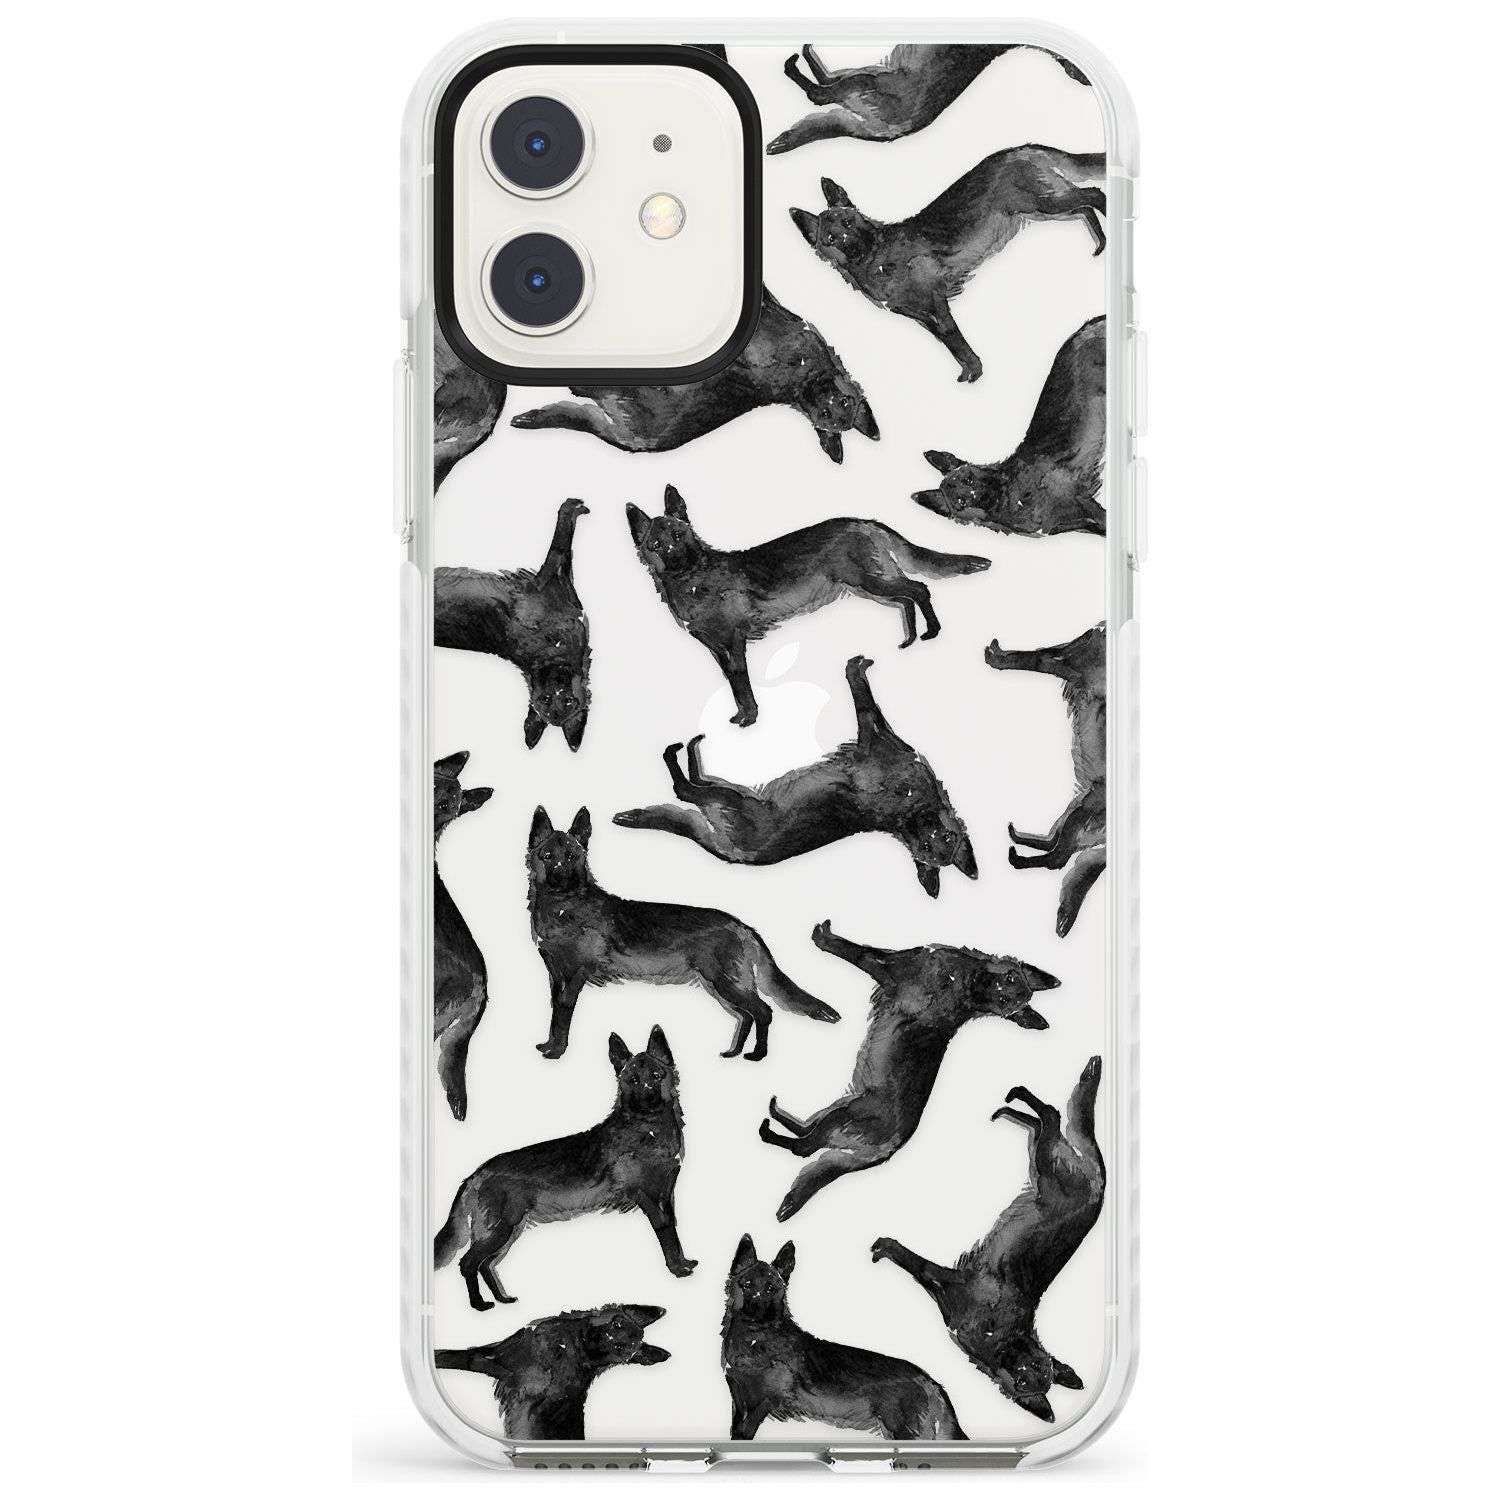 German Shepherd (Black) Watercolour Dog Pattern Impact Phone Case for iPhone 11